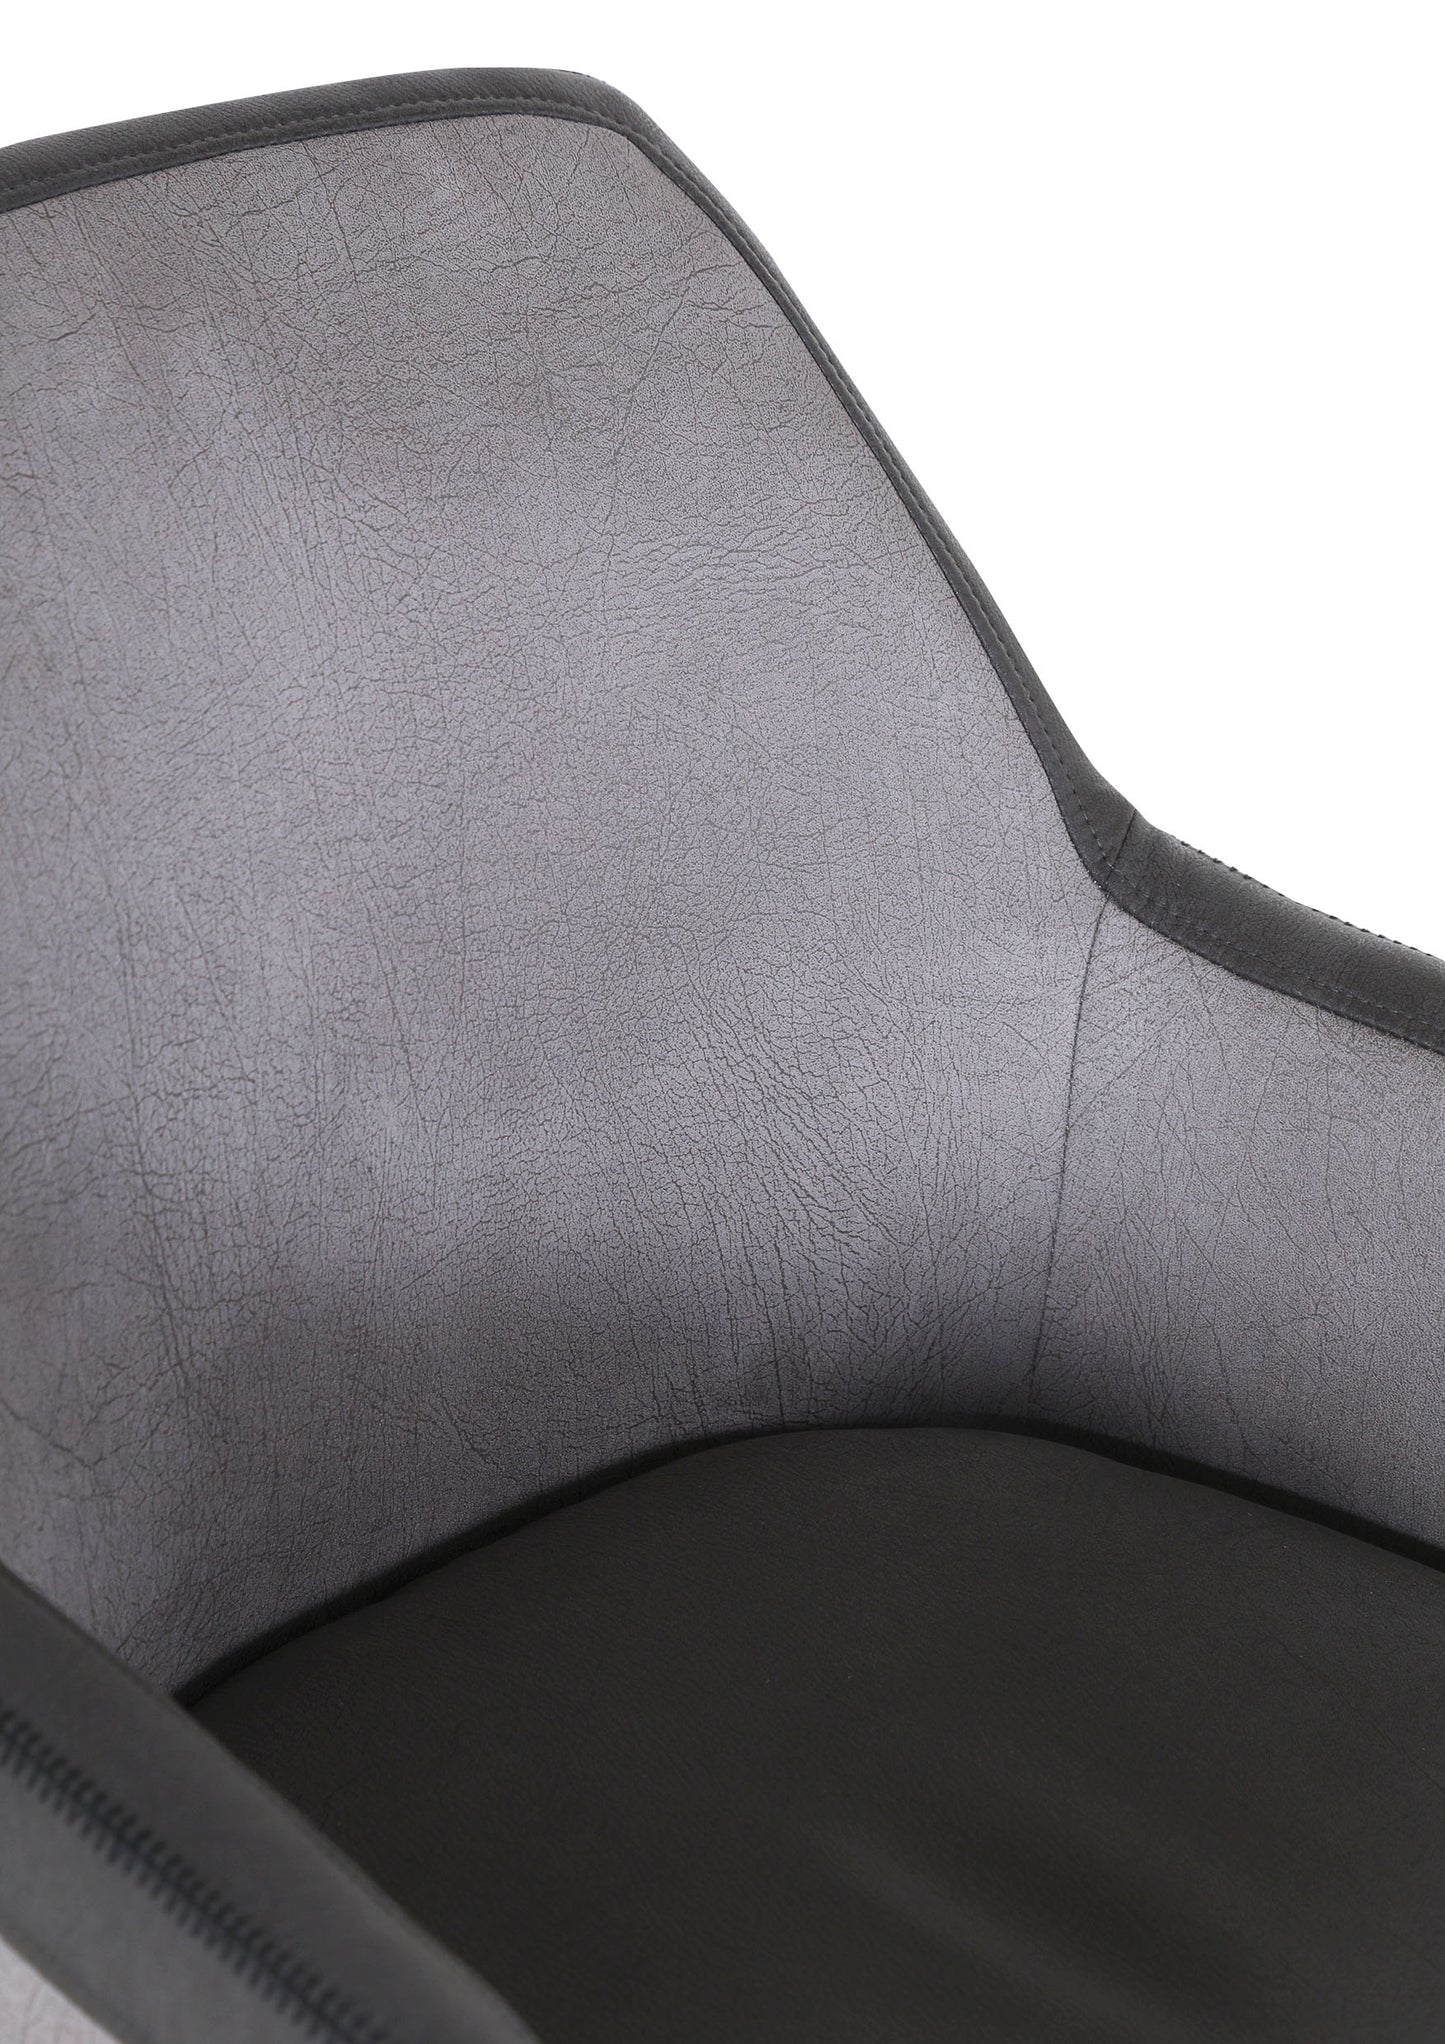 Armlehnenstuhl Stuhl +360 Grad Drehbar + Metall Gestell